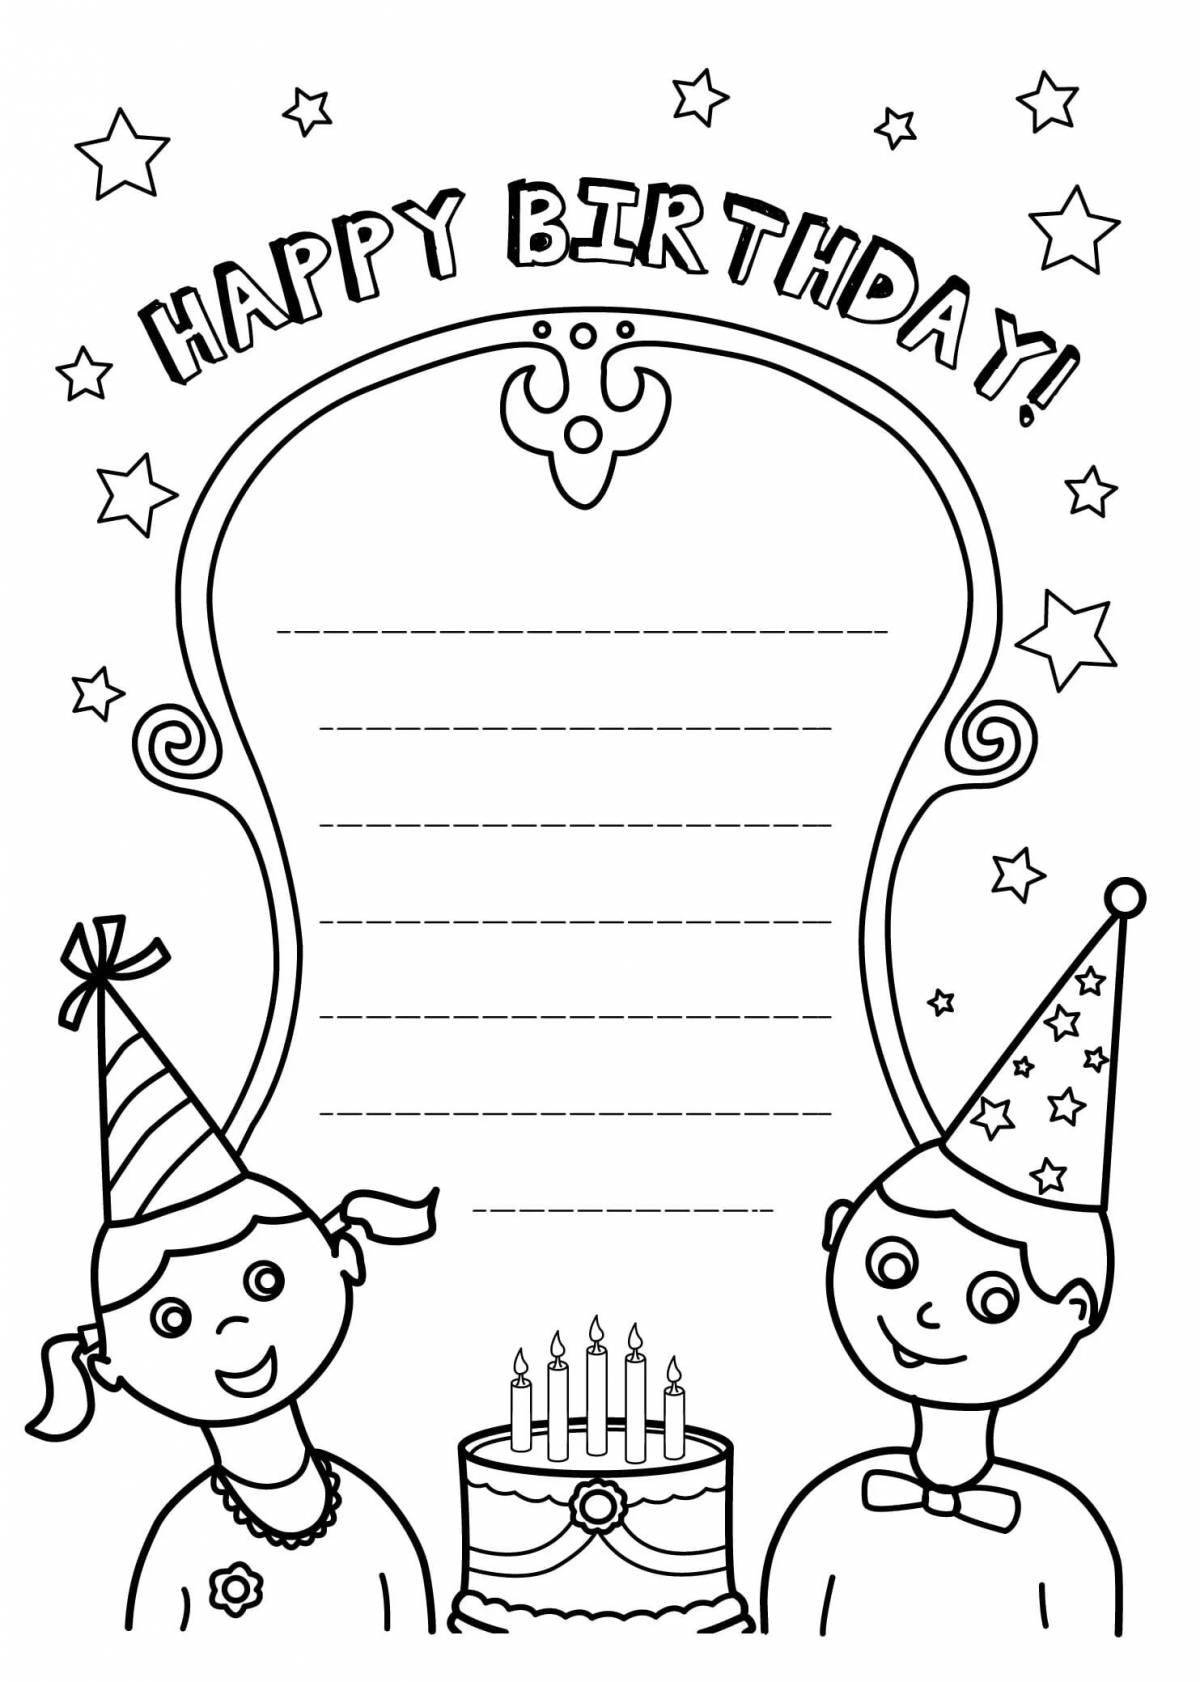 Exuberant-happy birthday card for children